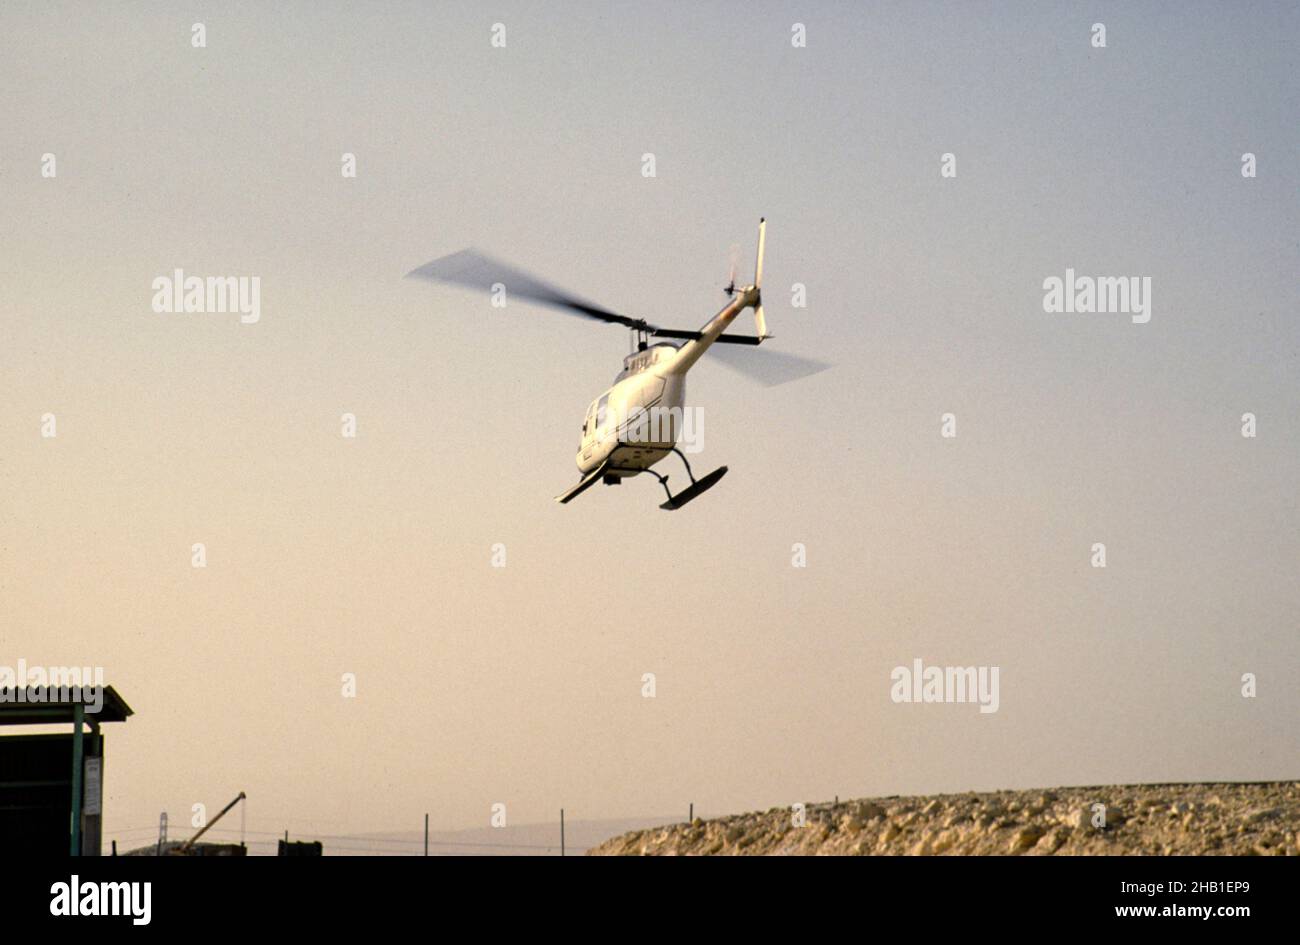 Oil industry in Ras Tanura area, Saudi Arabia, helicopter Bell 206 JetRanger 1979 Stock Photo